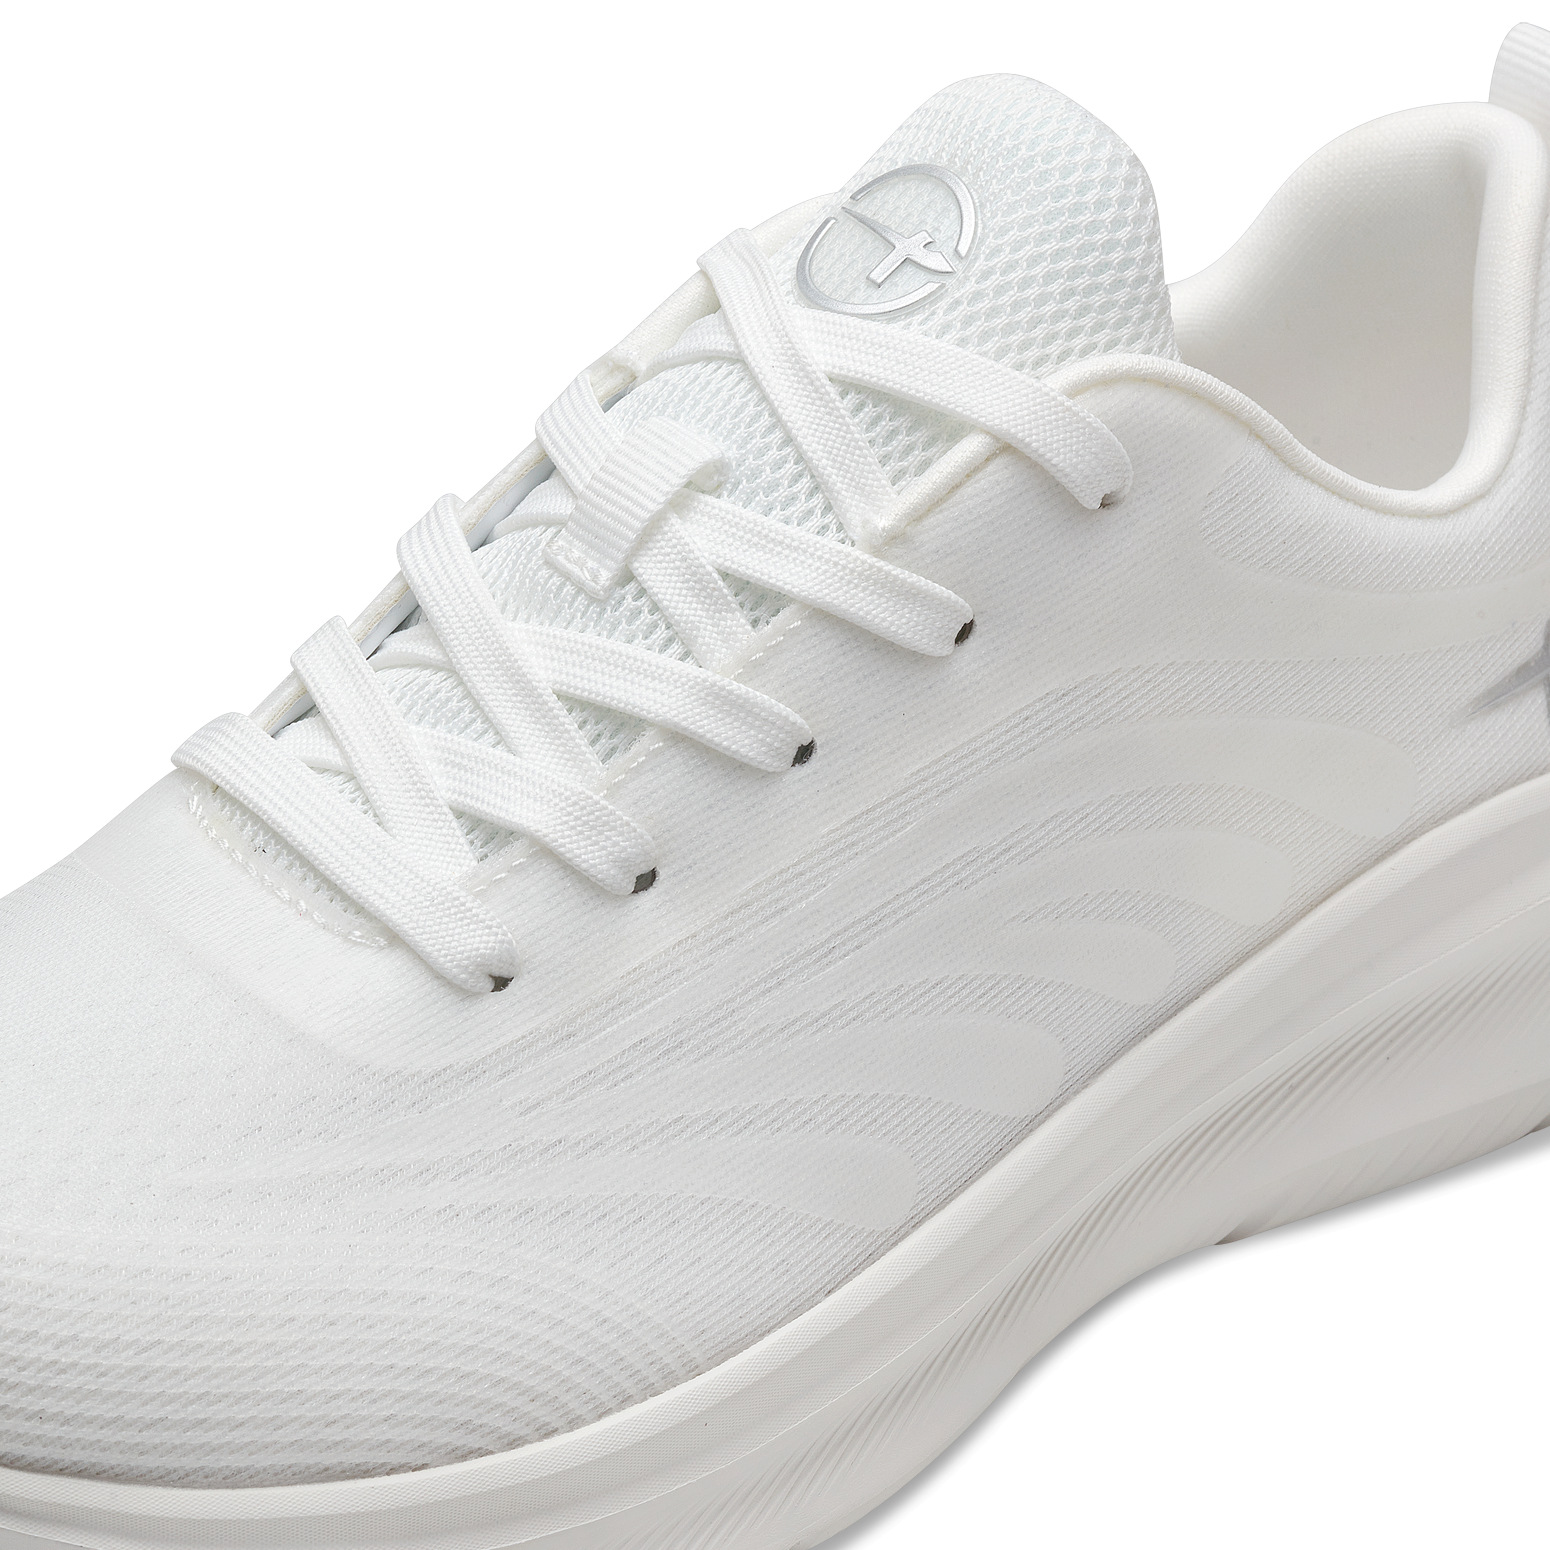 Tamaris Comfort Sneaker - Weiß Textil/Synthetik